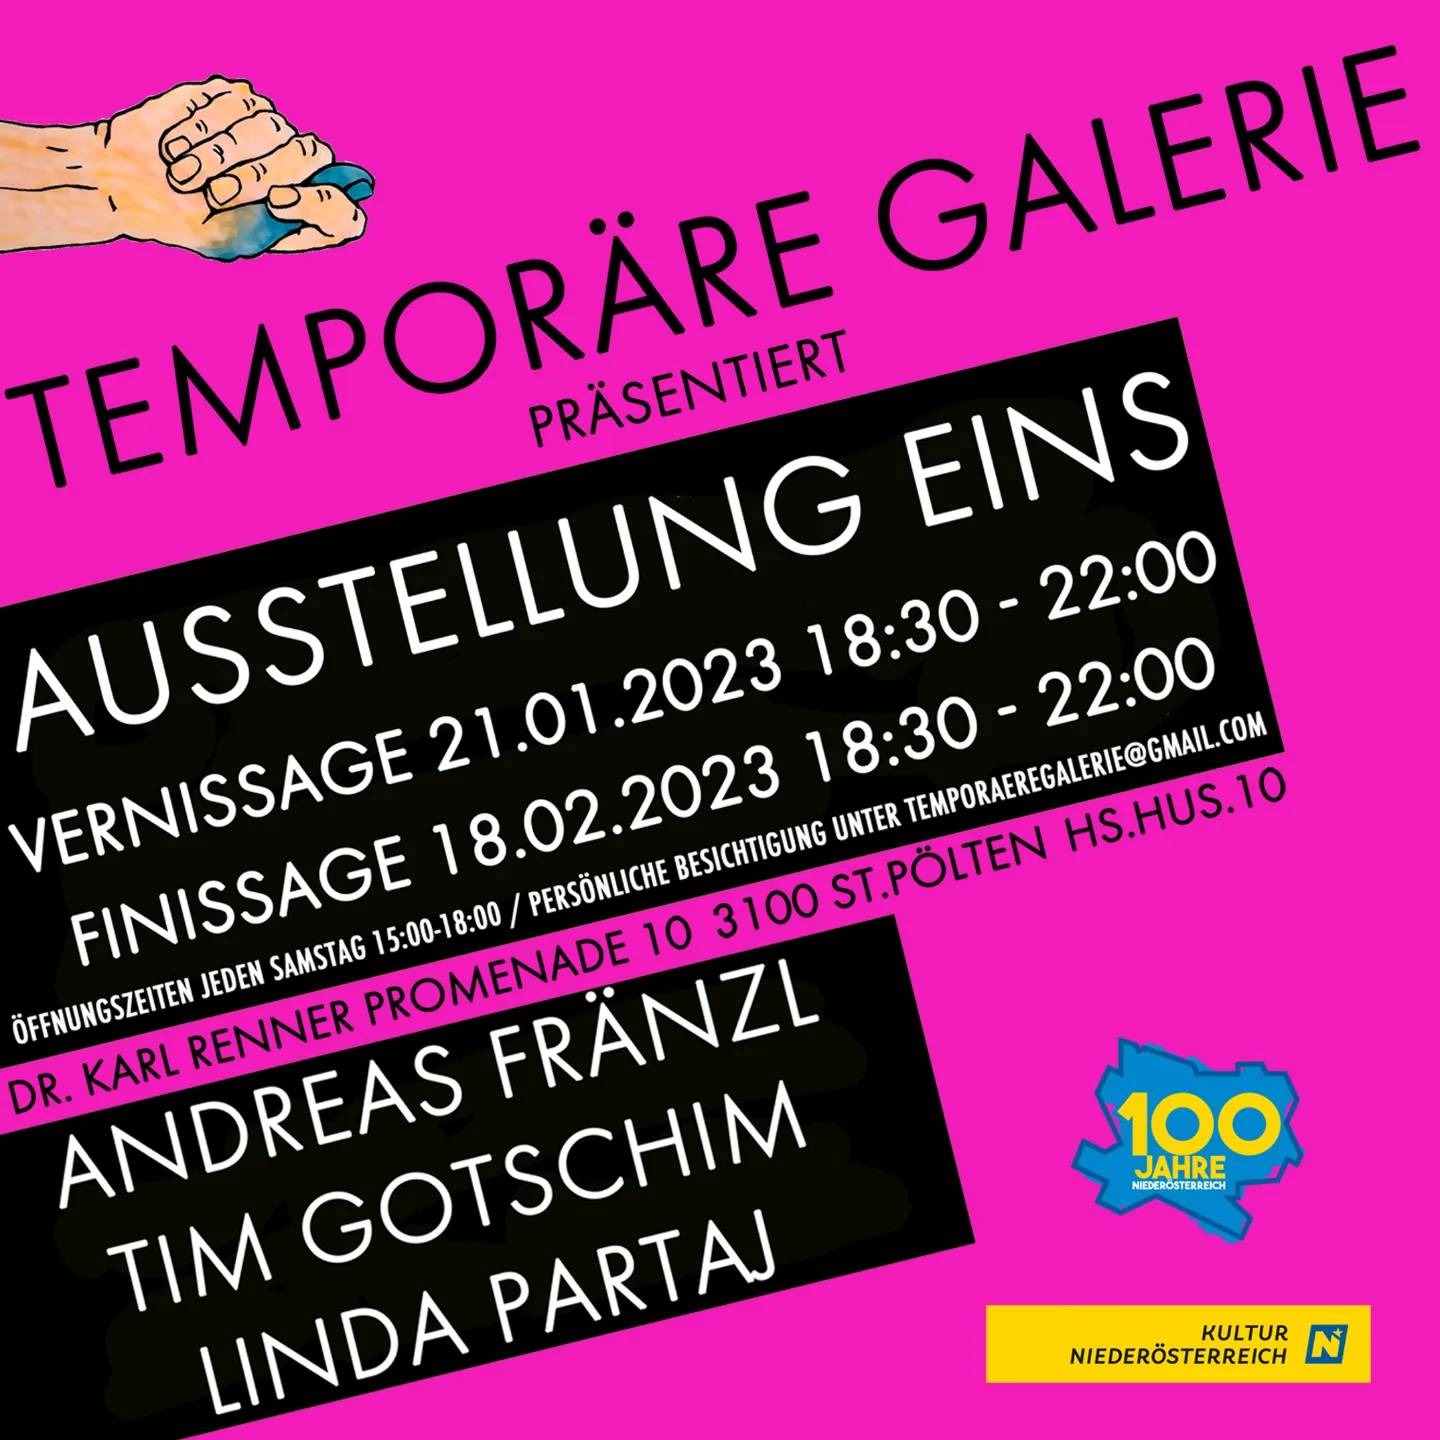 Temporäre Galerie / Ausstellung 1 / 27.1. 19 Uhr